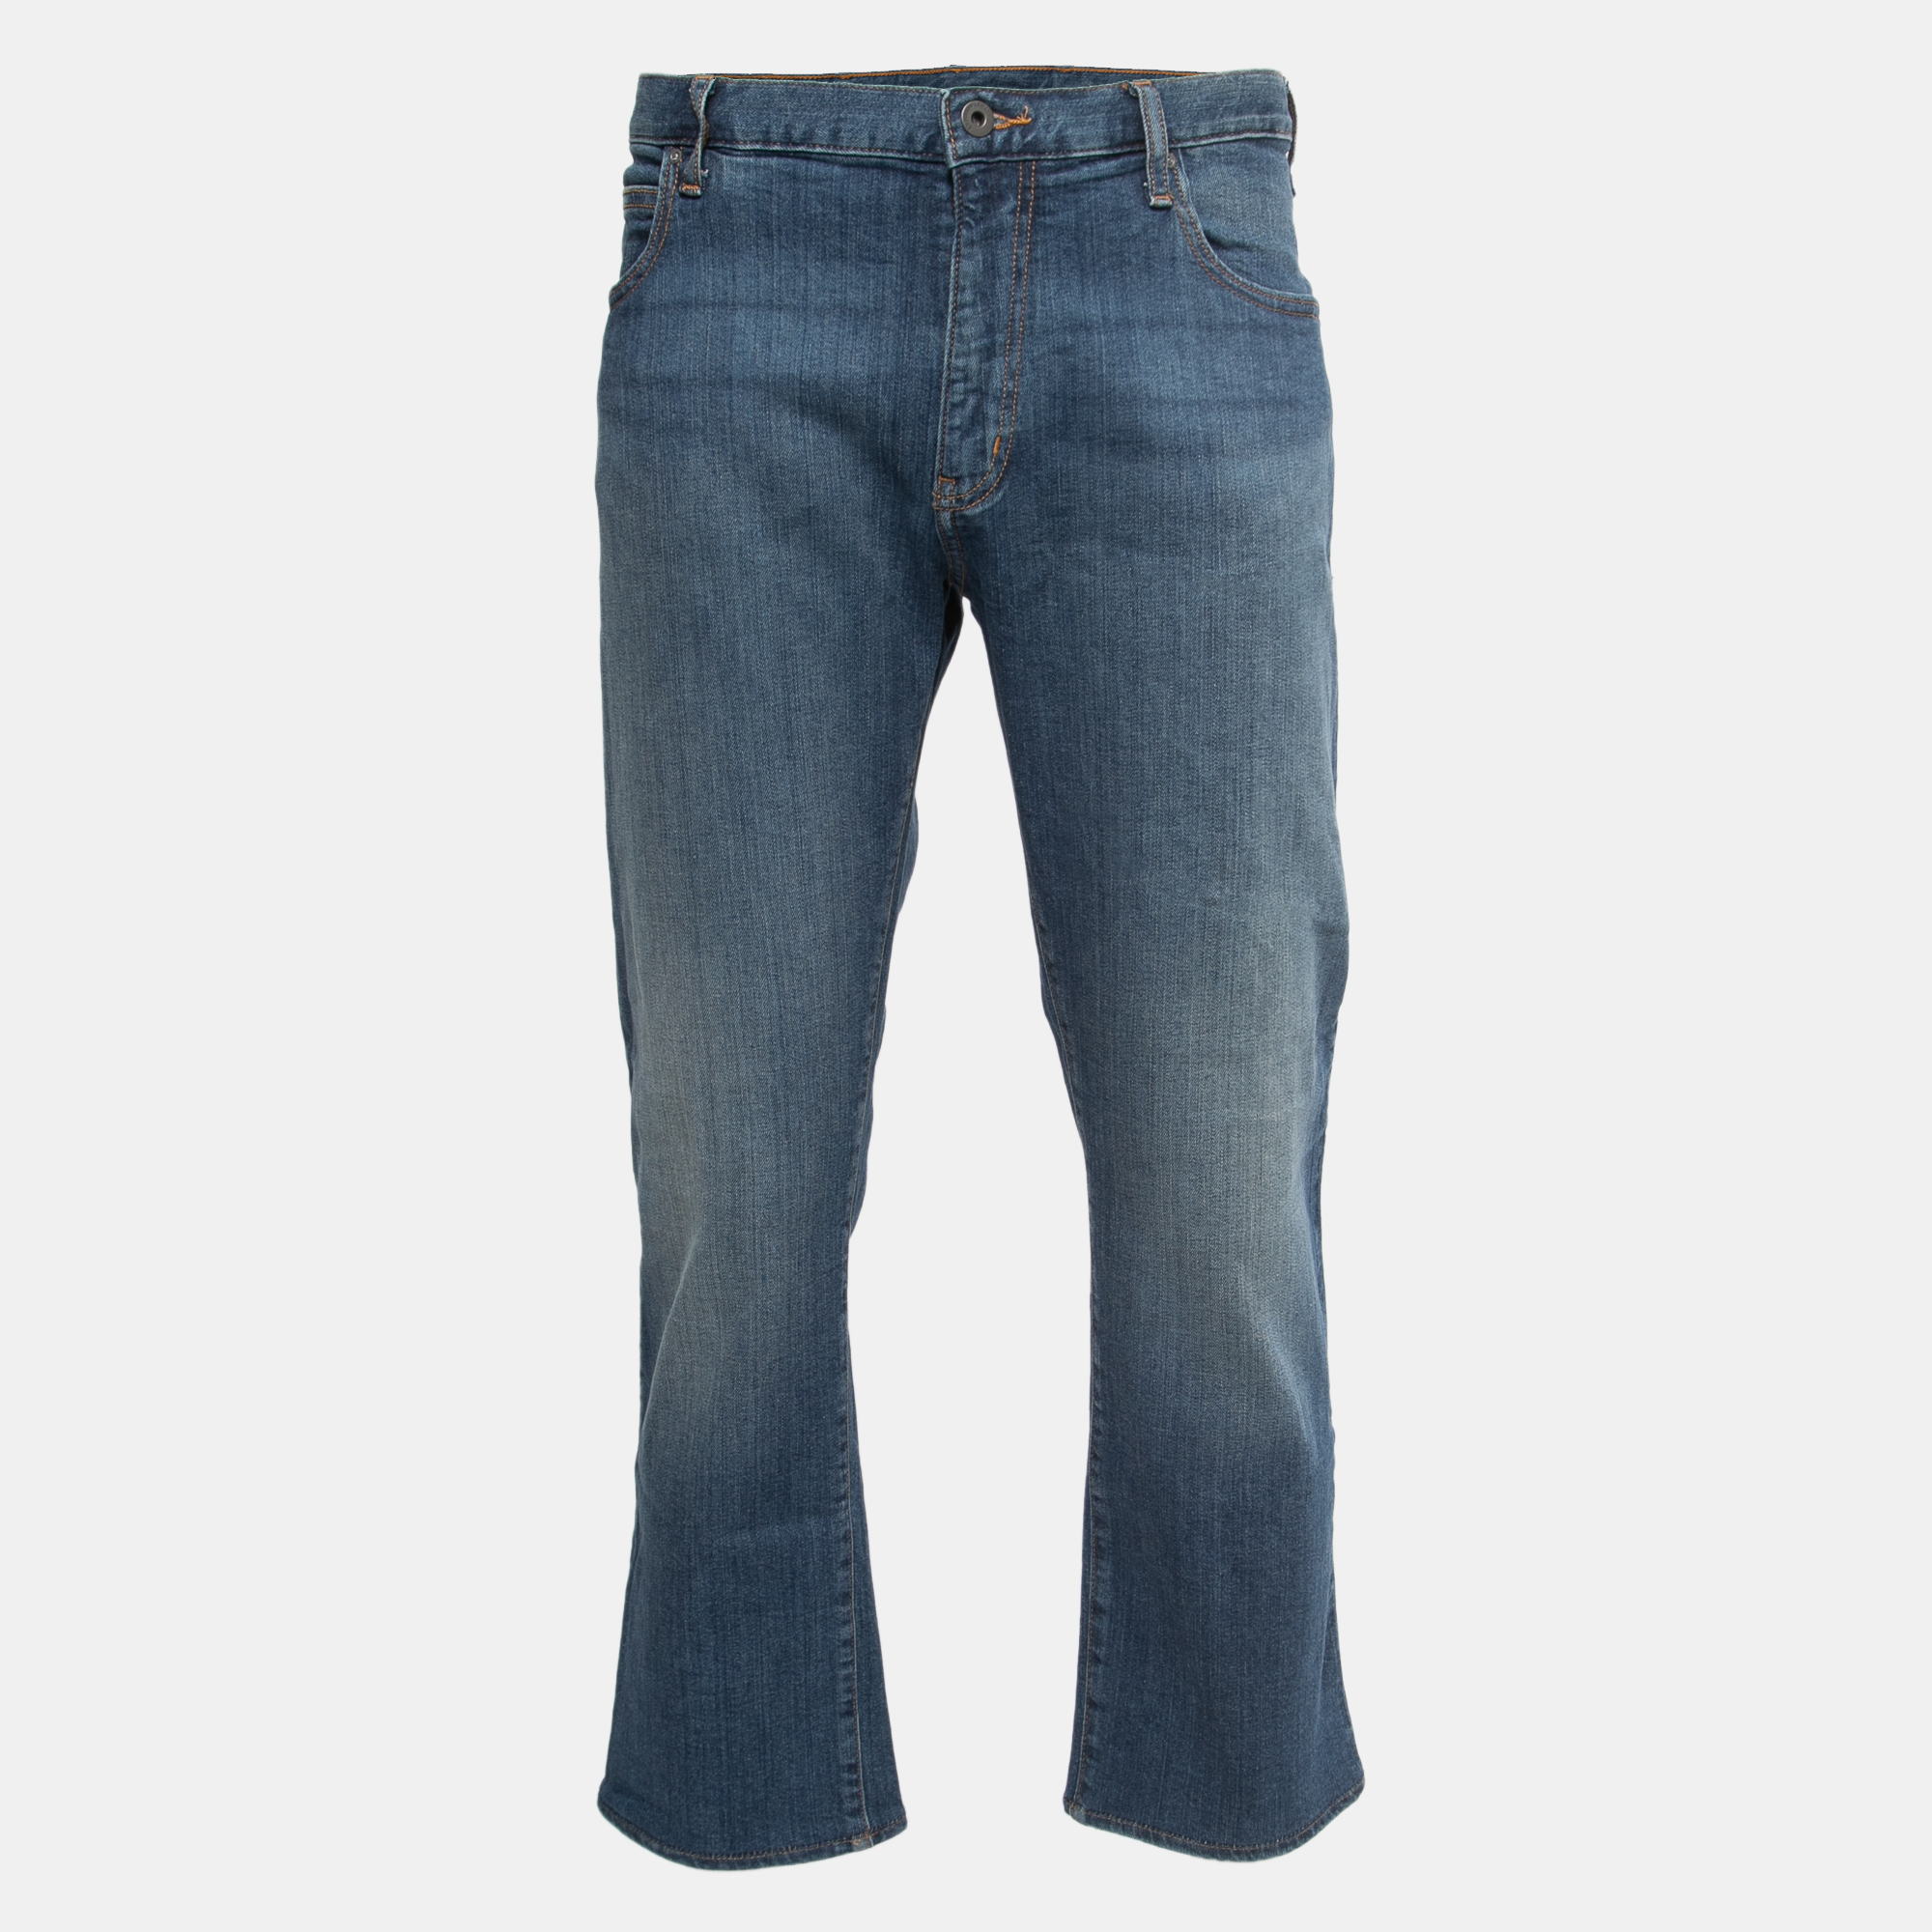 Emporio armani blue denim straight fit jeans xxl/waist 39"